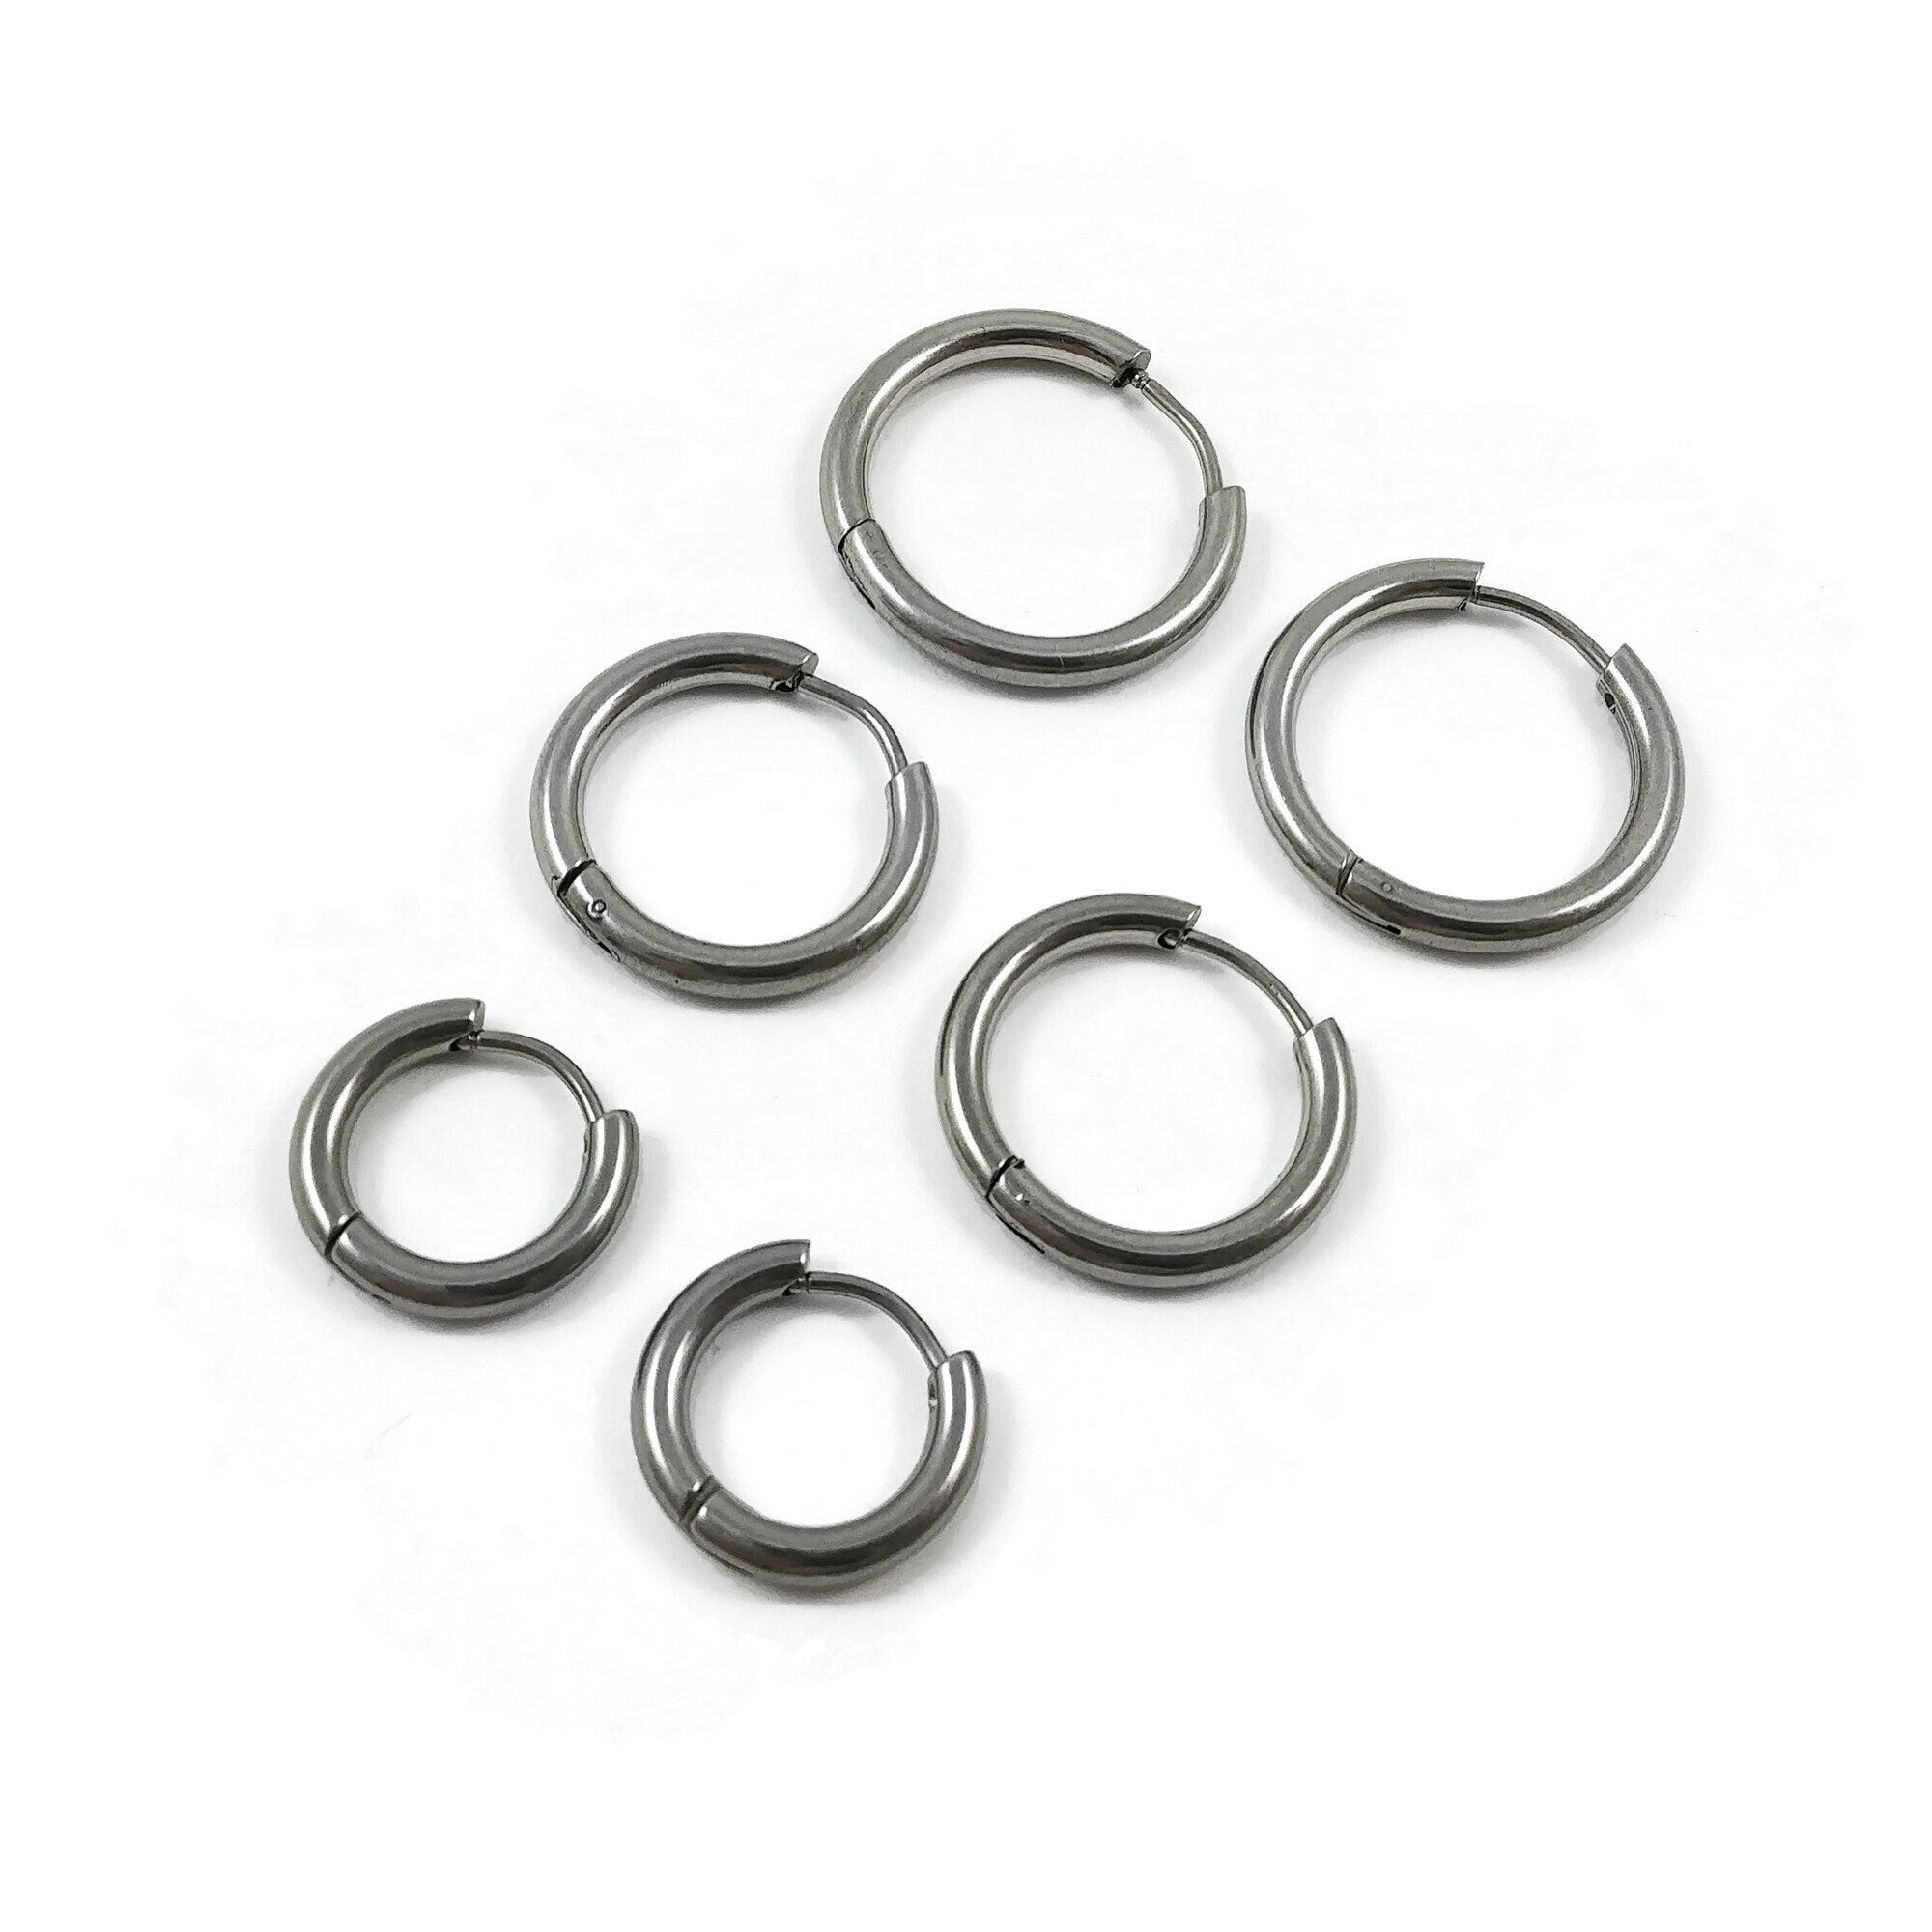 Stainless steel huggie hoops, Hypoallergenic earring findings, Silver earring hoops, 3 sizes available